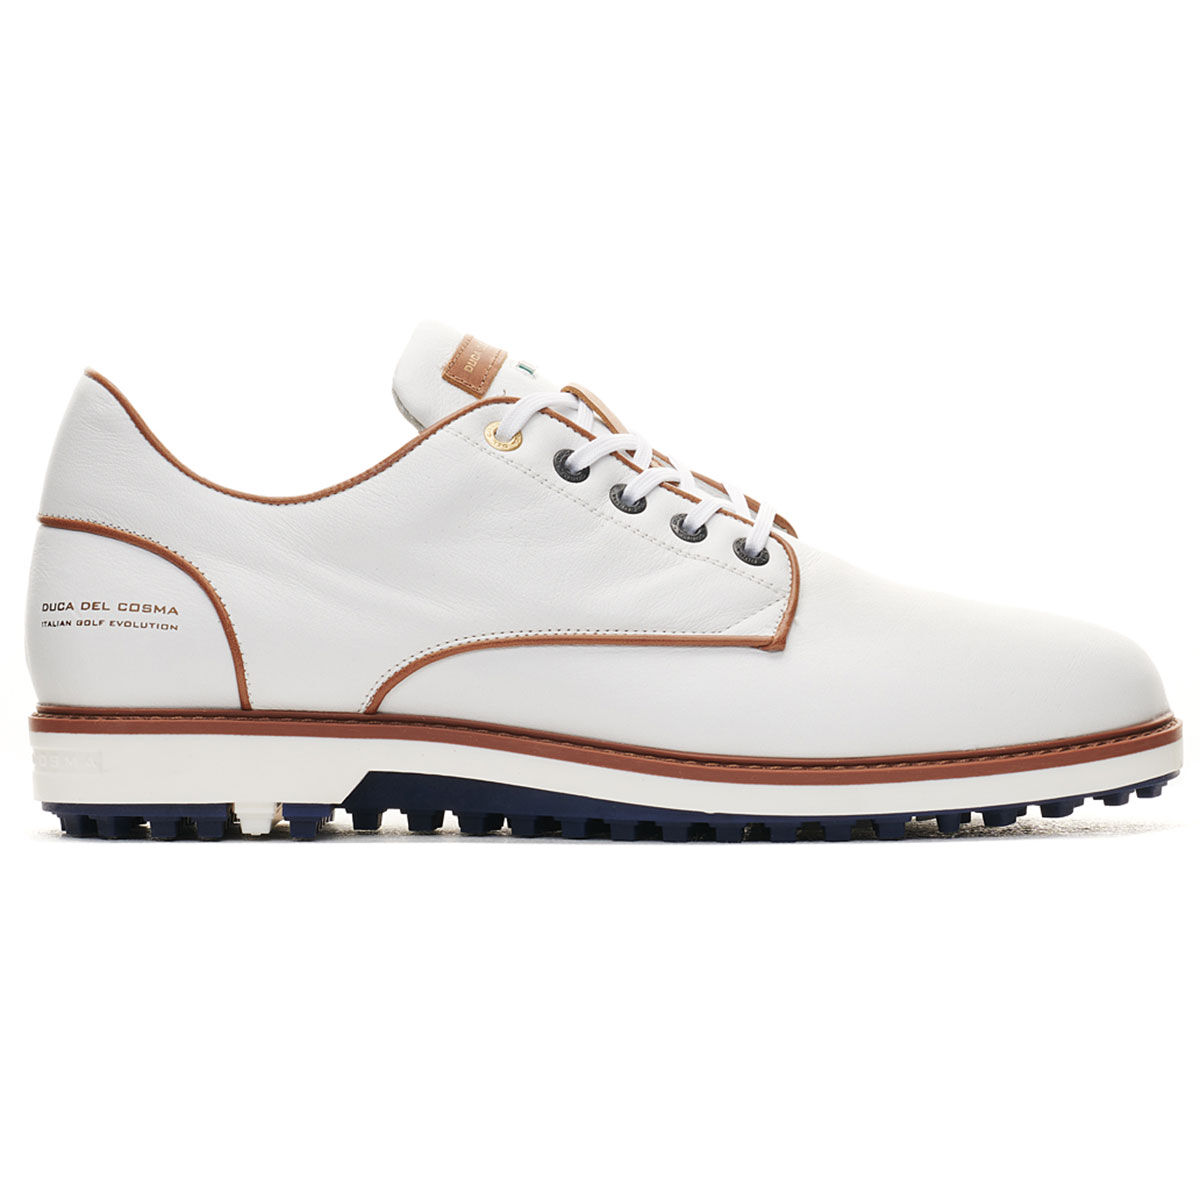 Chaussures Duca Del Cosma El Paso, homme, 7, Blanc | Online Golf